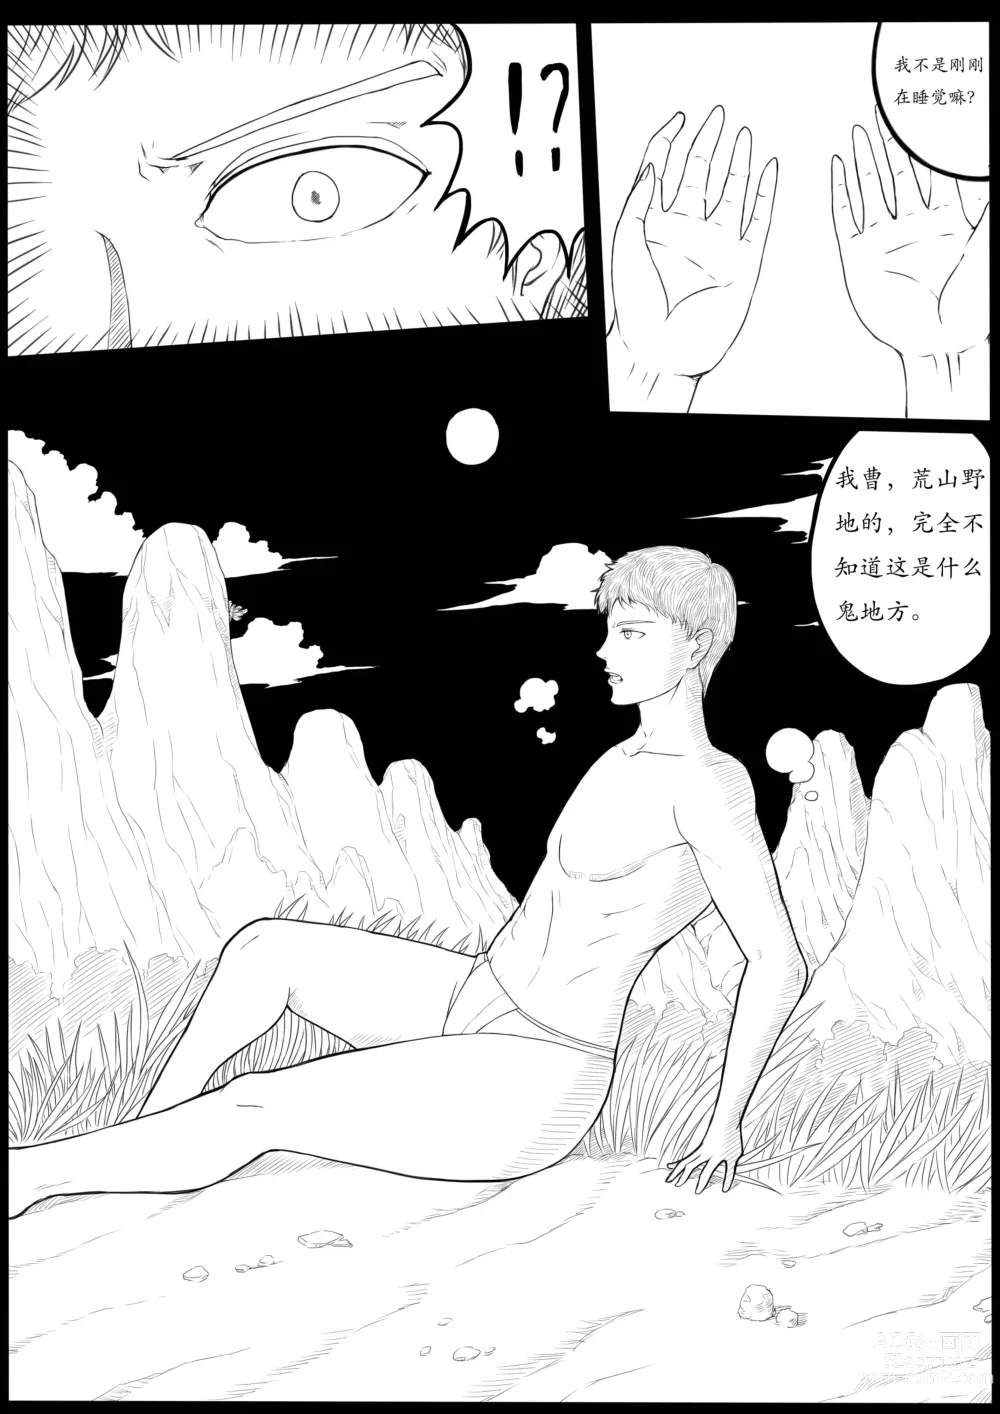 Page 8 of doujinshi 暗黑西游记第一集 V1 & V2